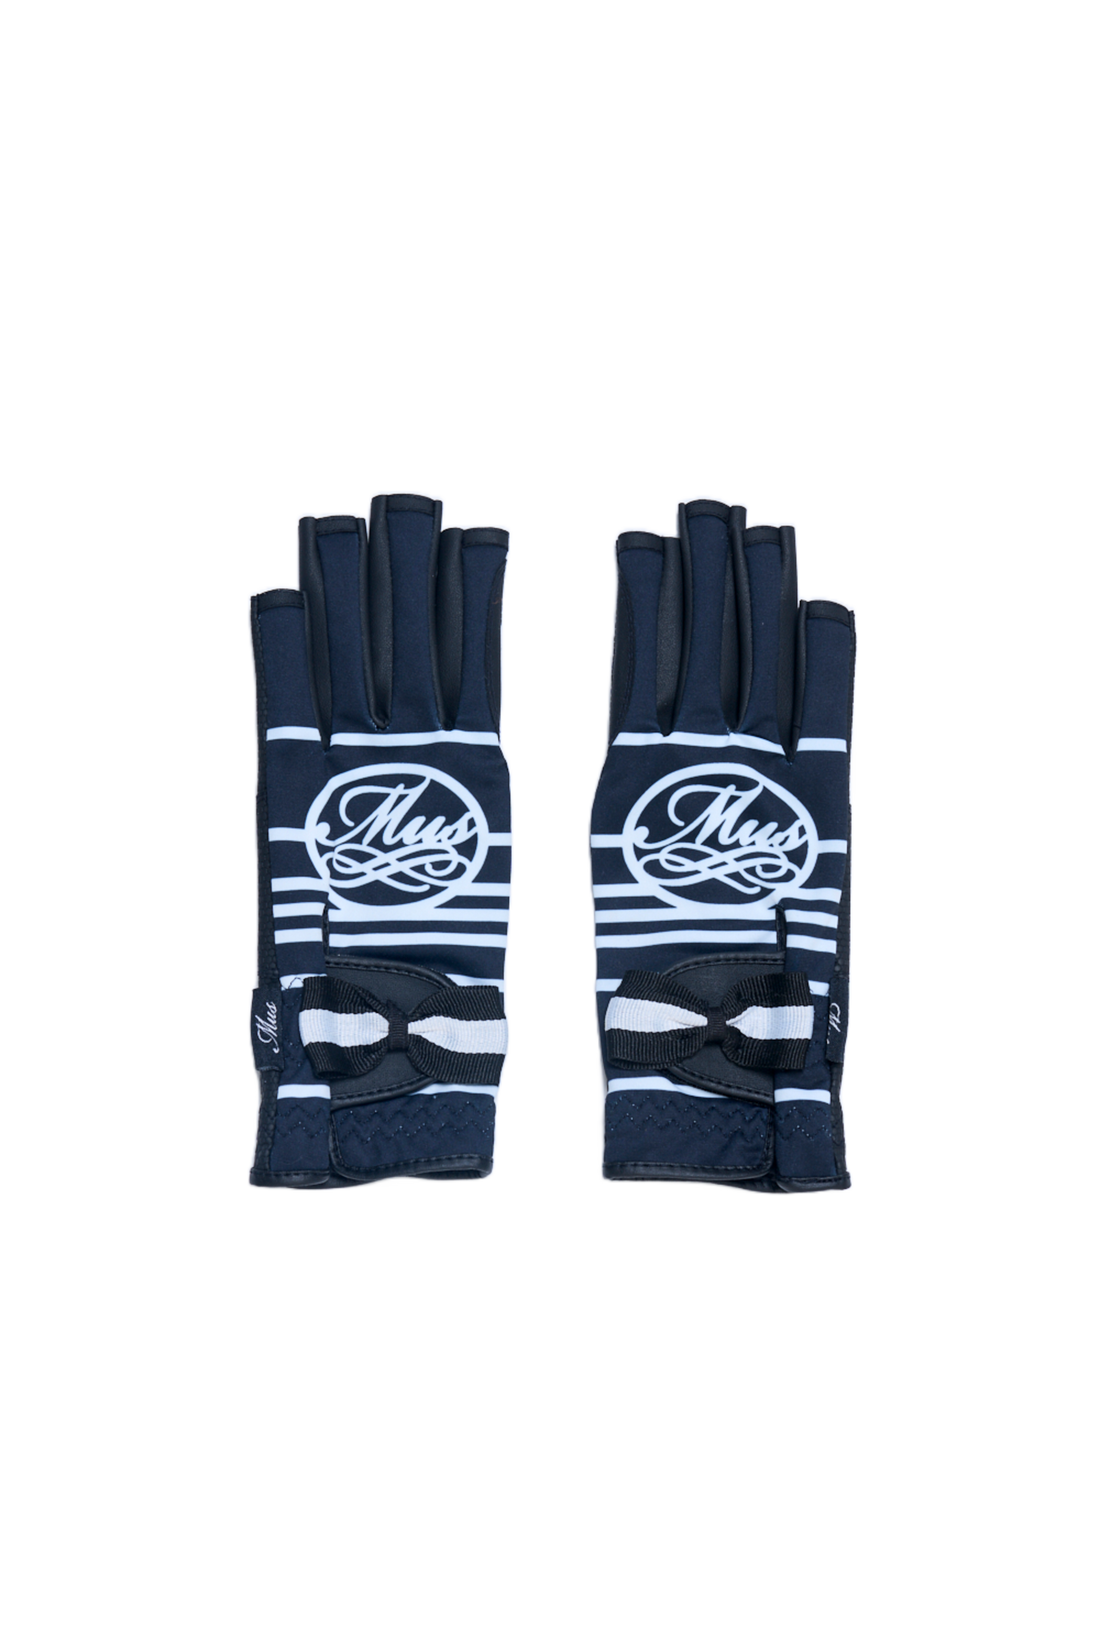 Ribbon strap fingertip cut two-handed gloves (703H6802)